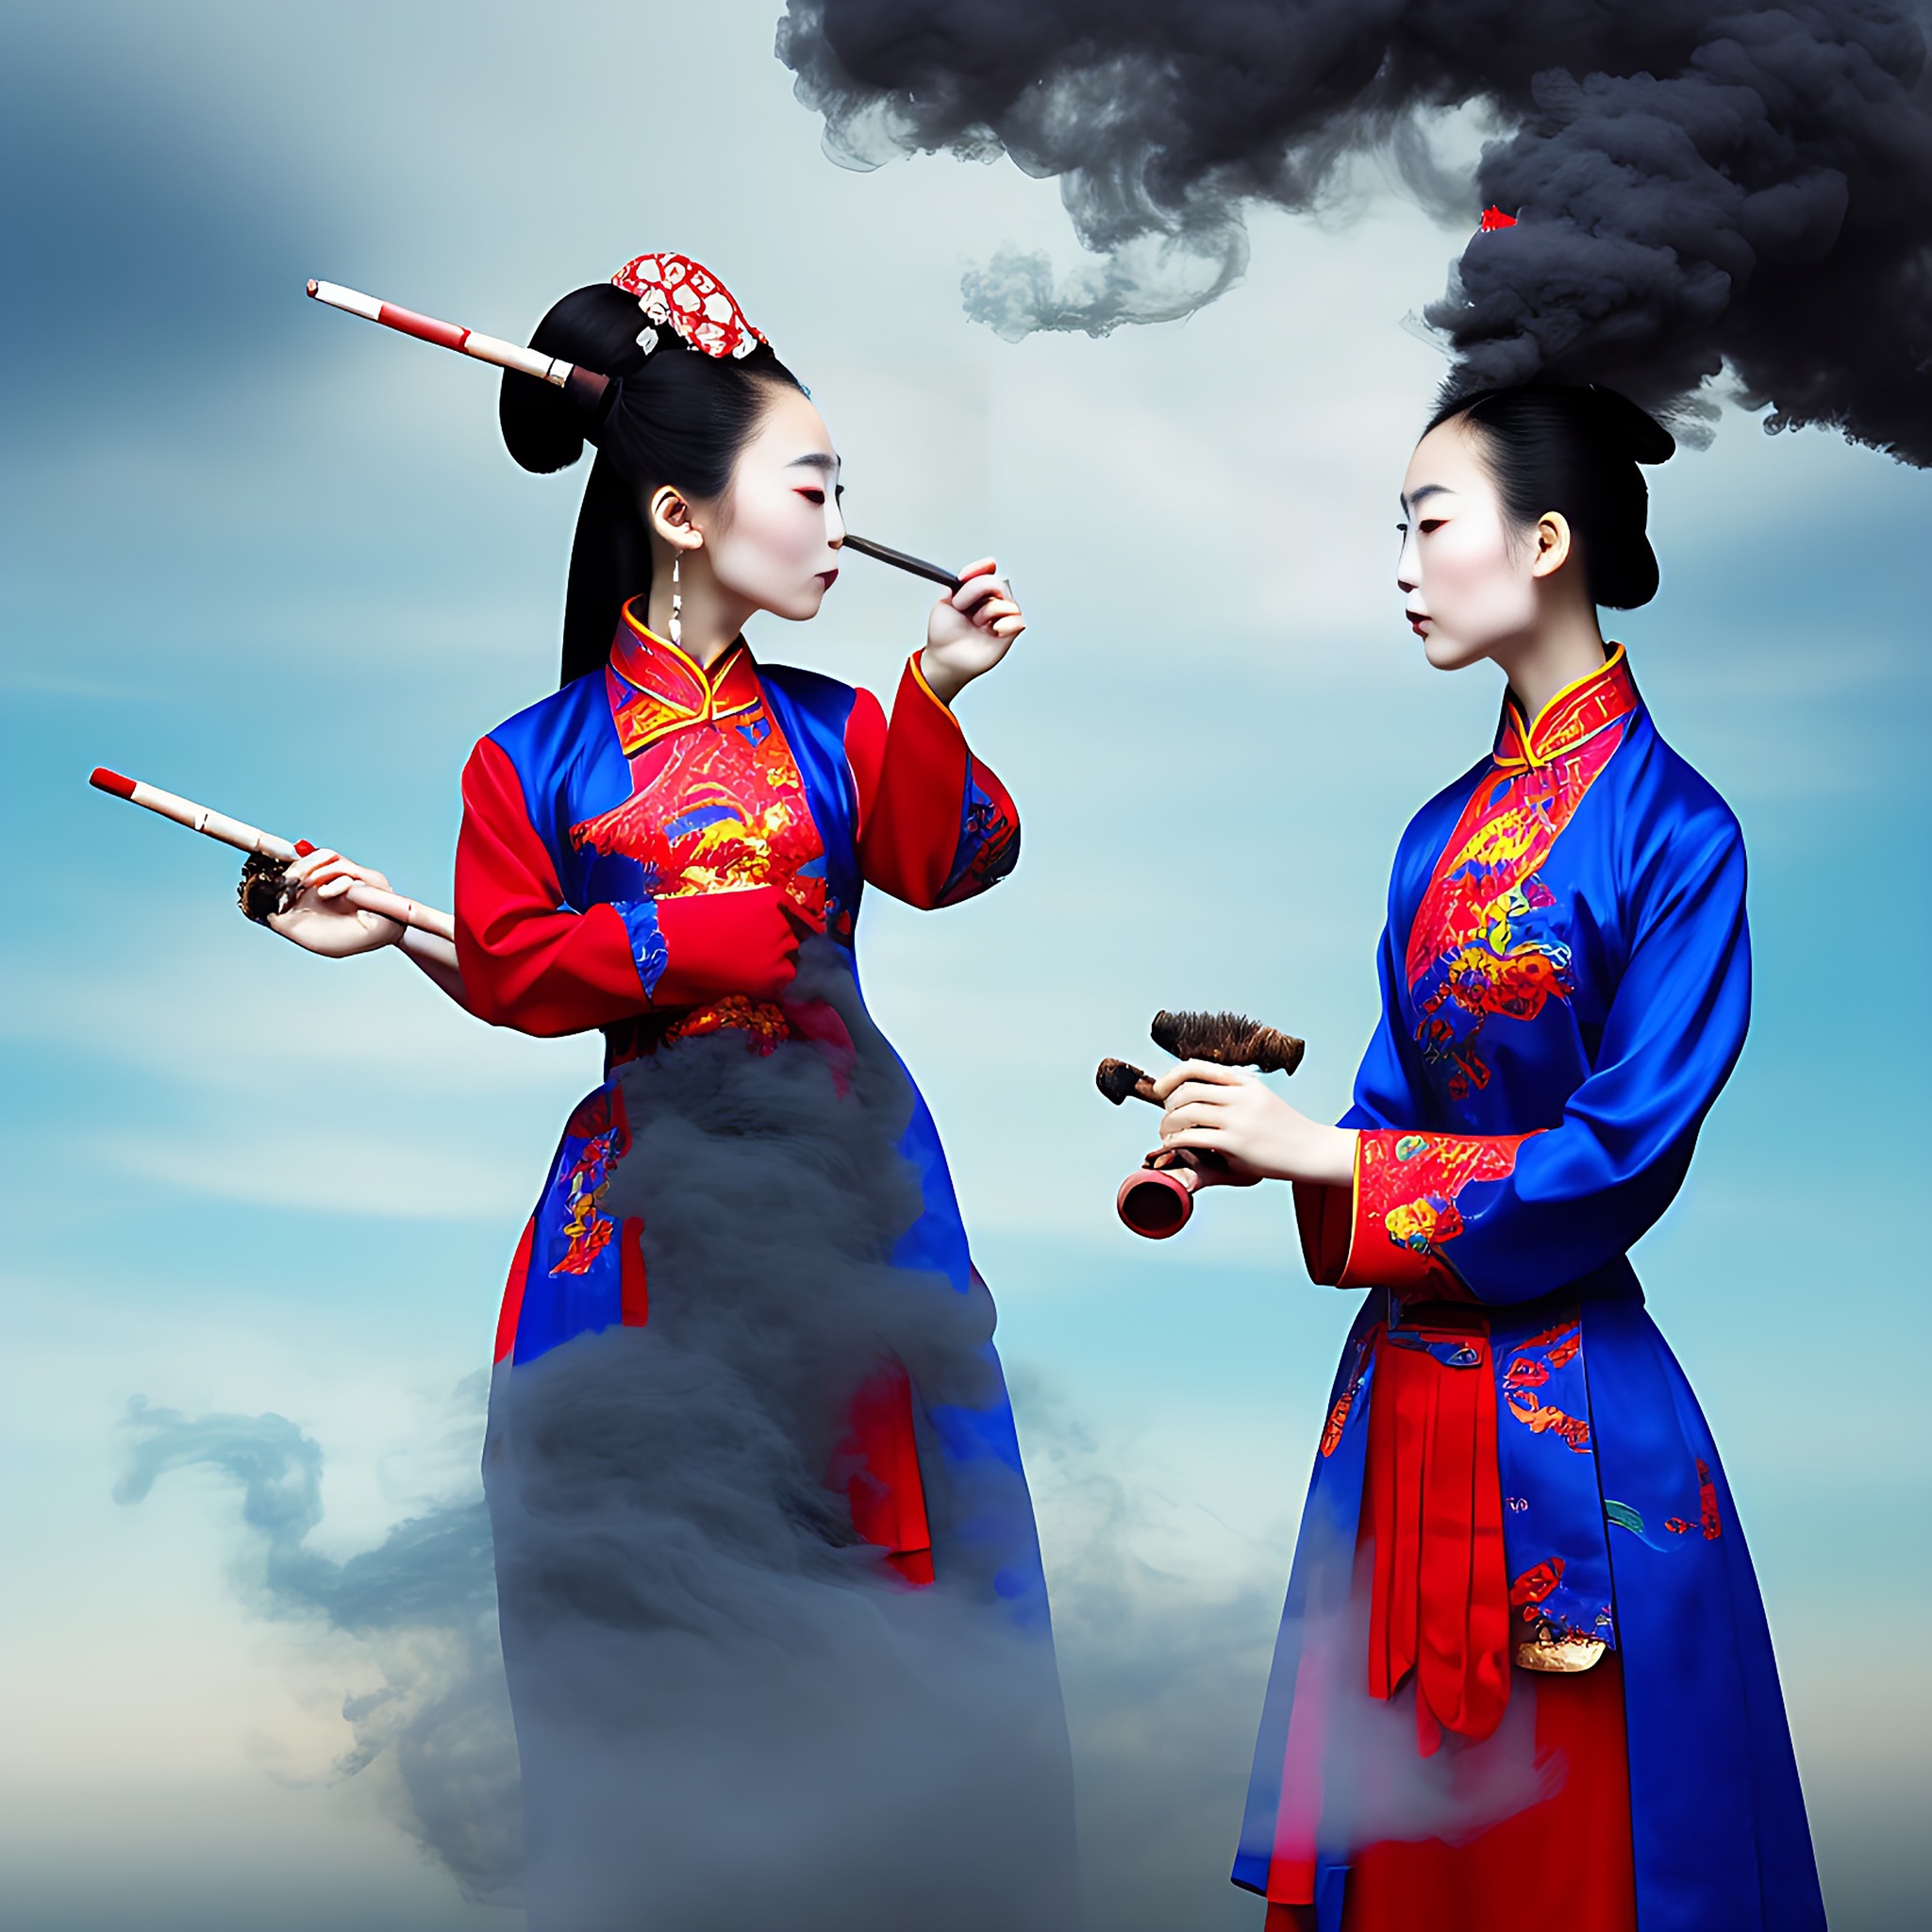 chinese-traditional-girl-woman-smoke-smoking